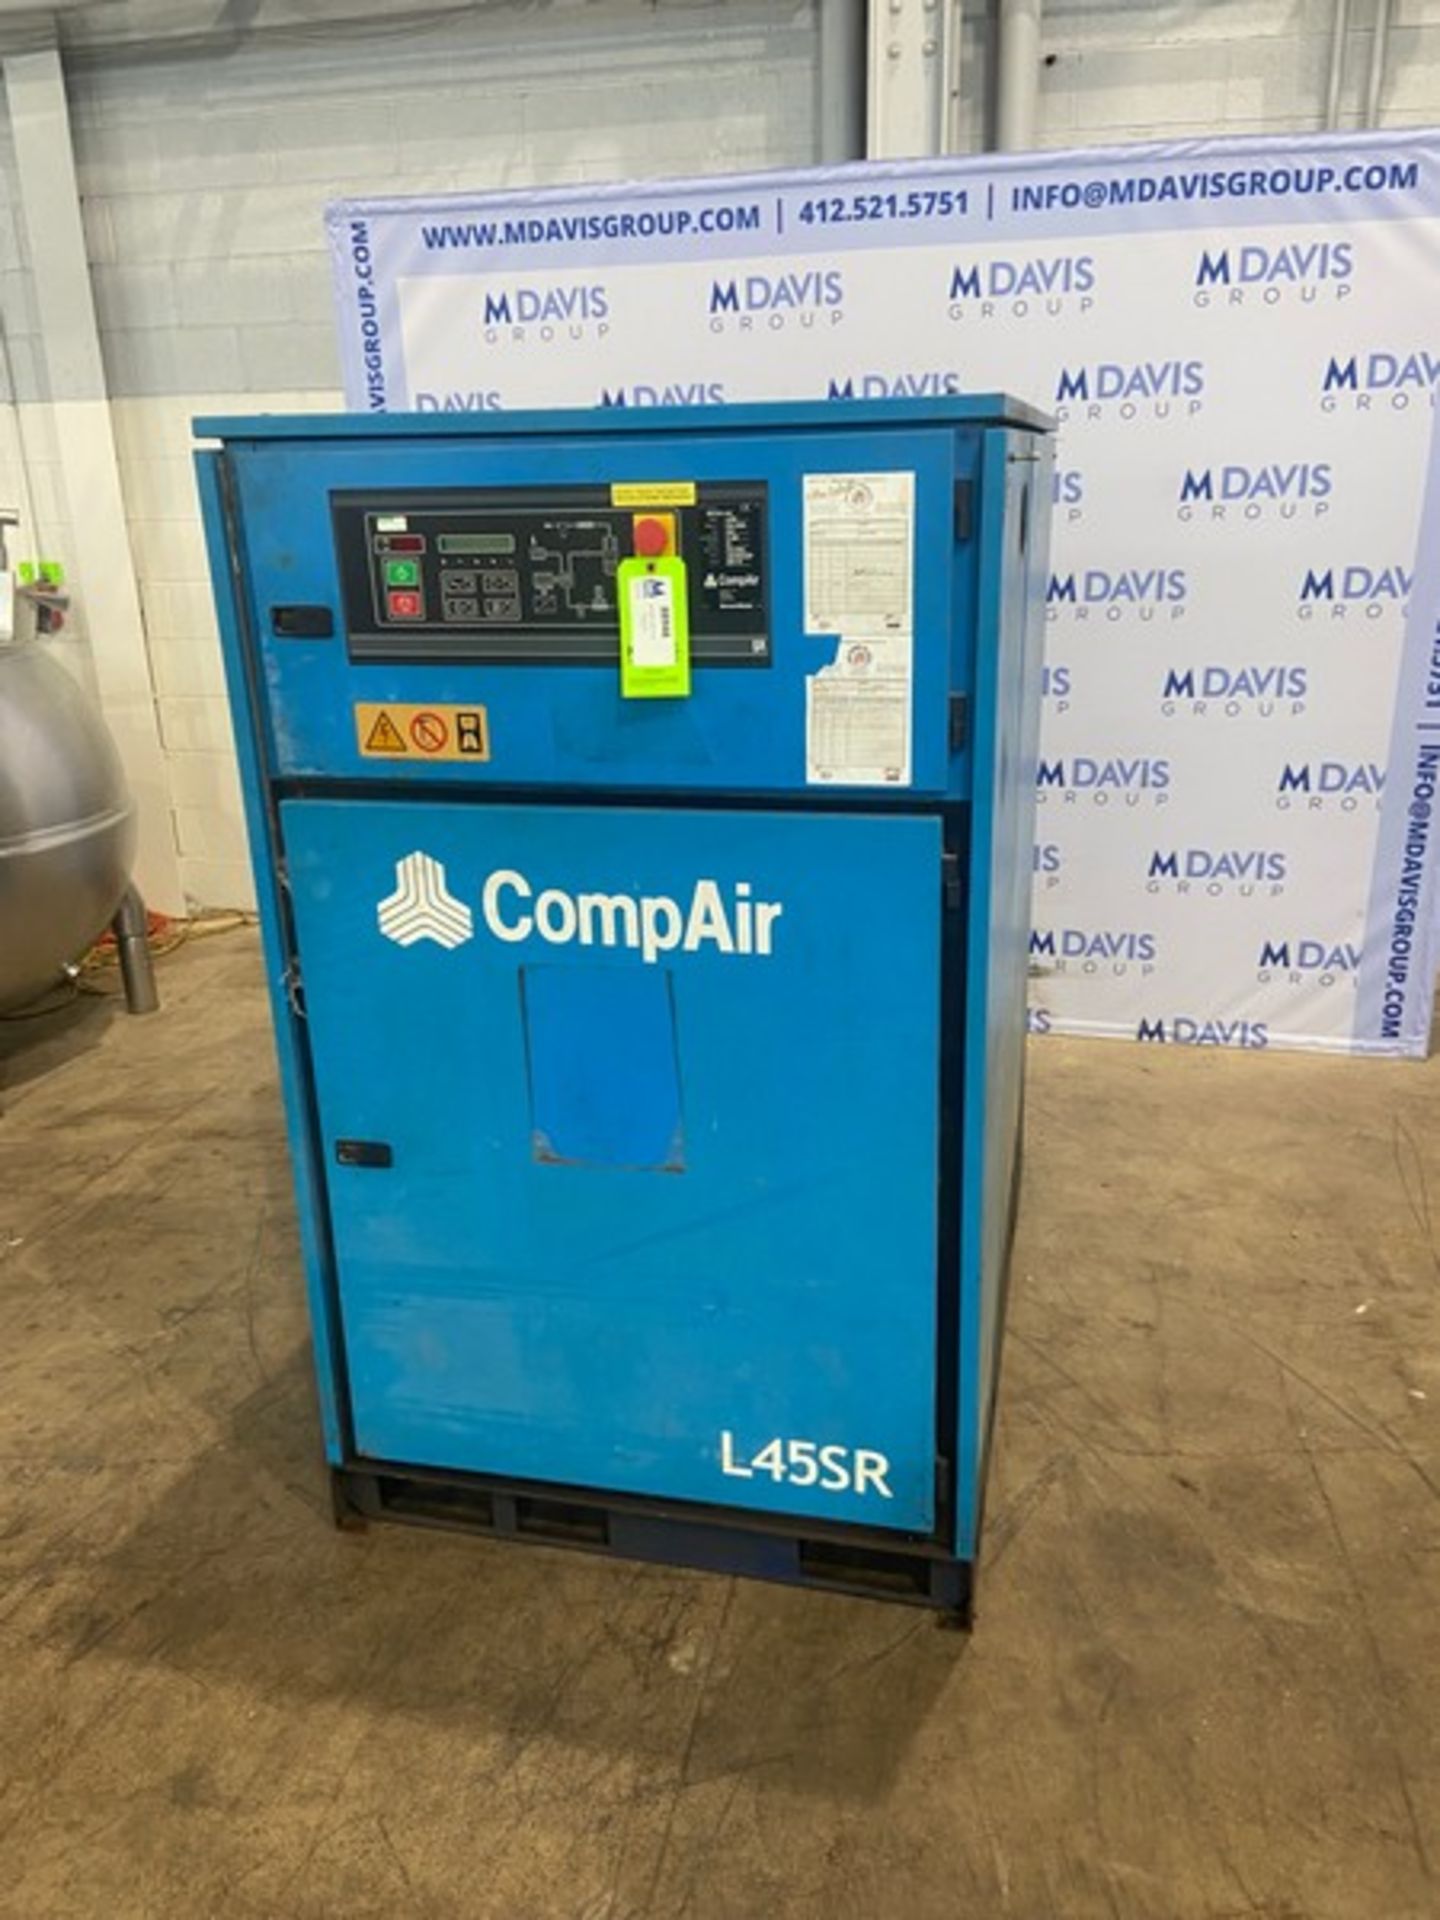 CompAir Air Compressor,-M/N L45SR, S/N F180-0508, Max. Pressure 13 BAR, Motor RPM 750-5000, 440/